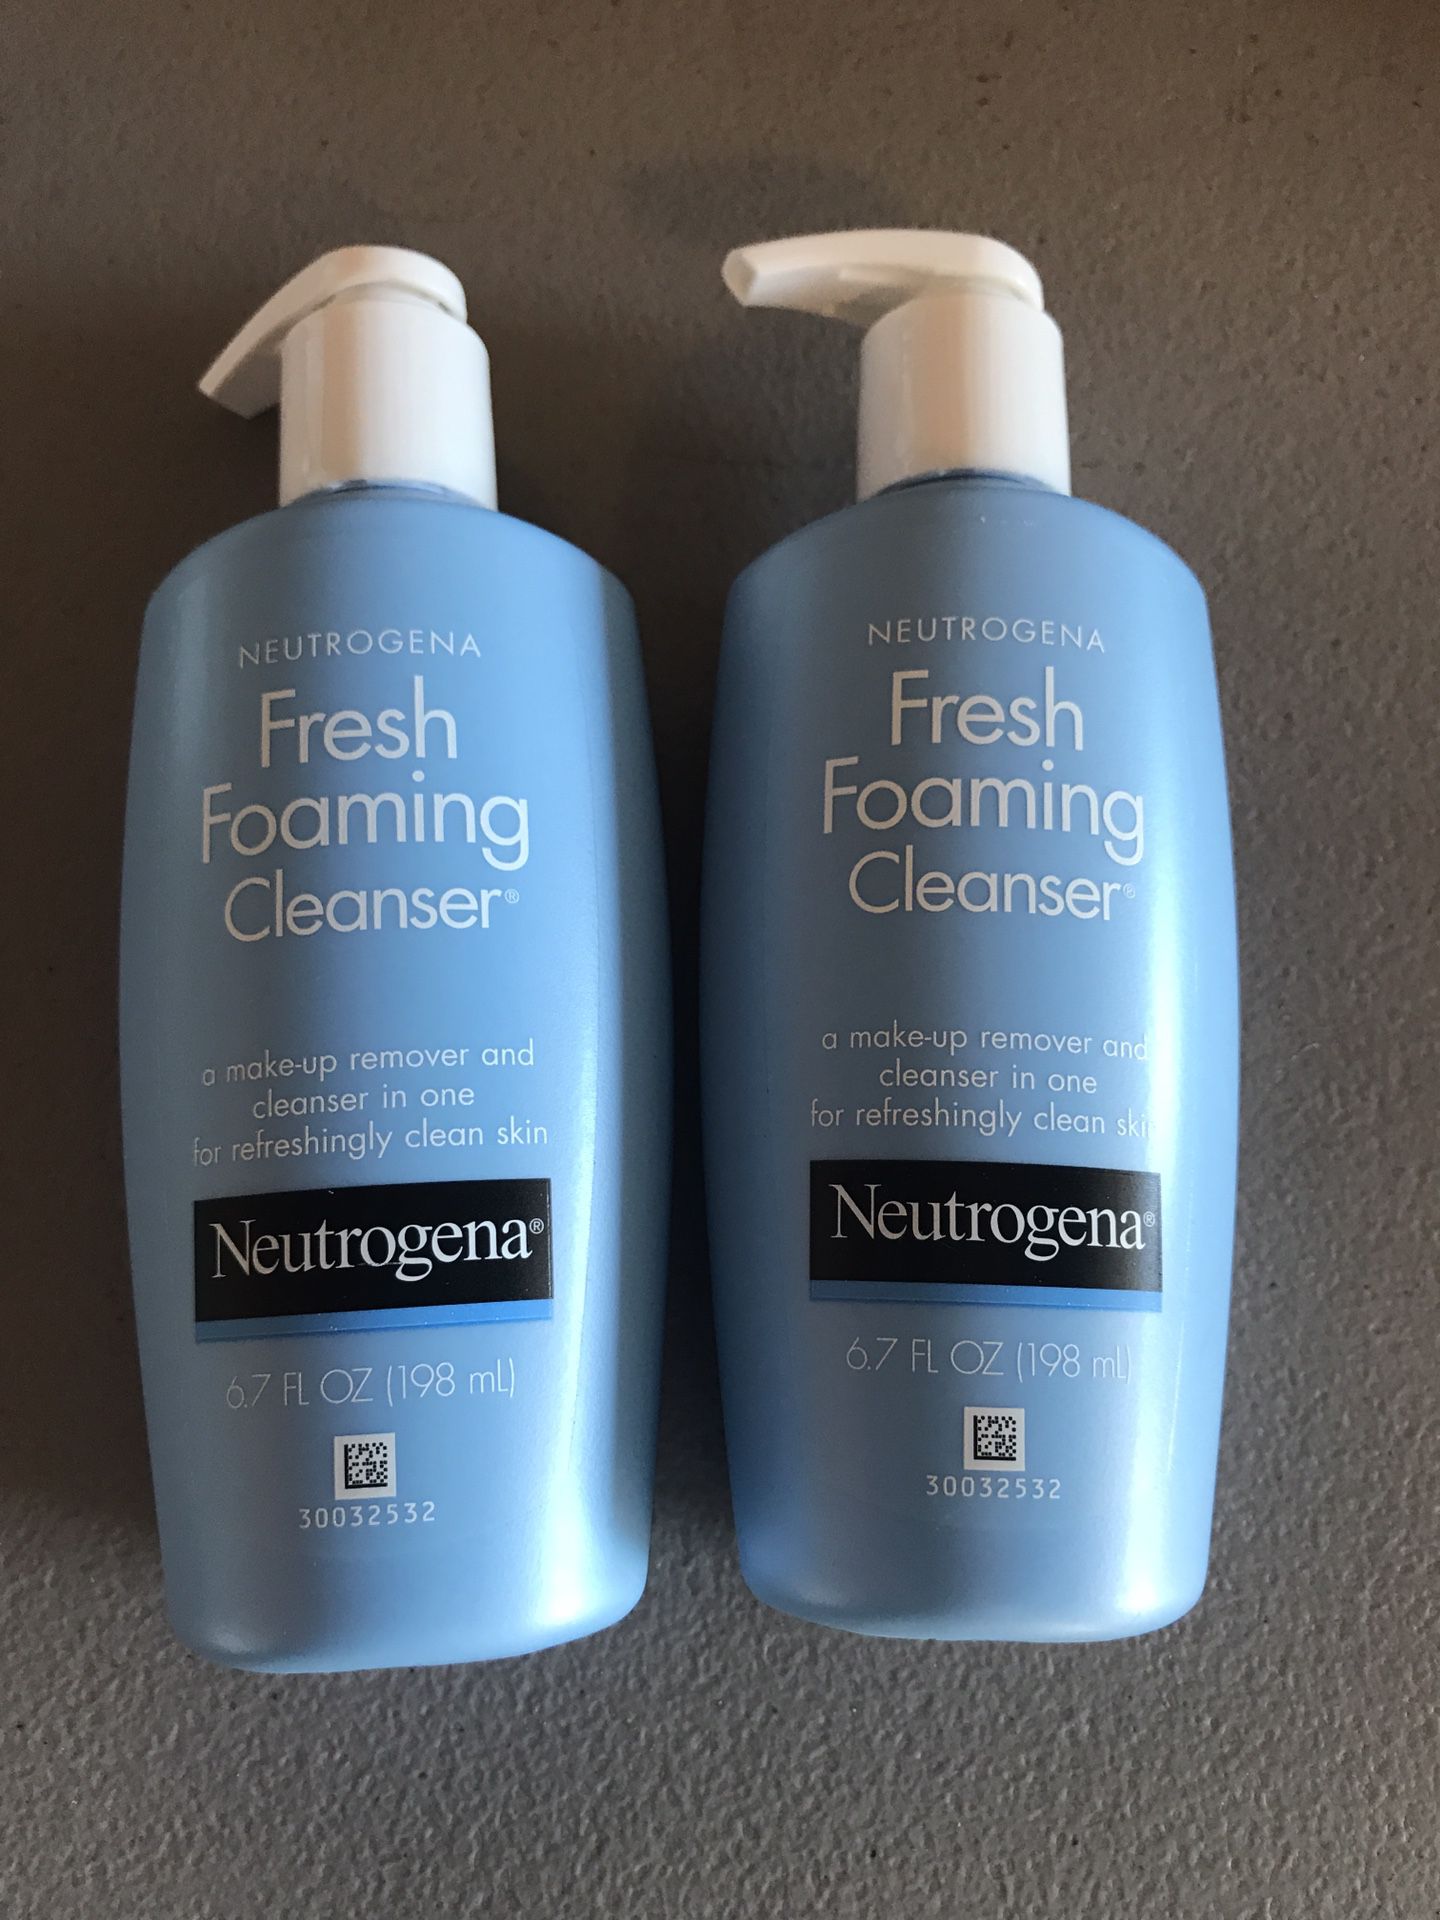 Neutrogena fresh foaming cleanser